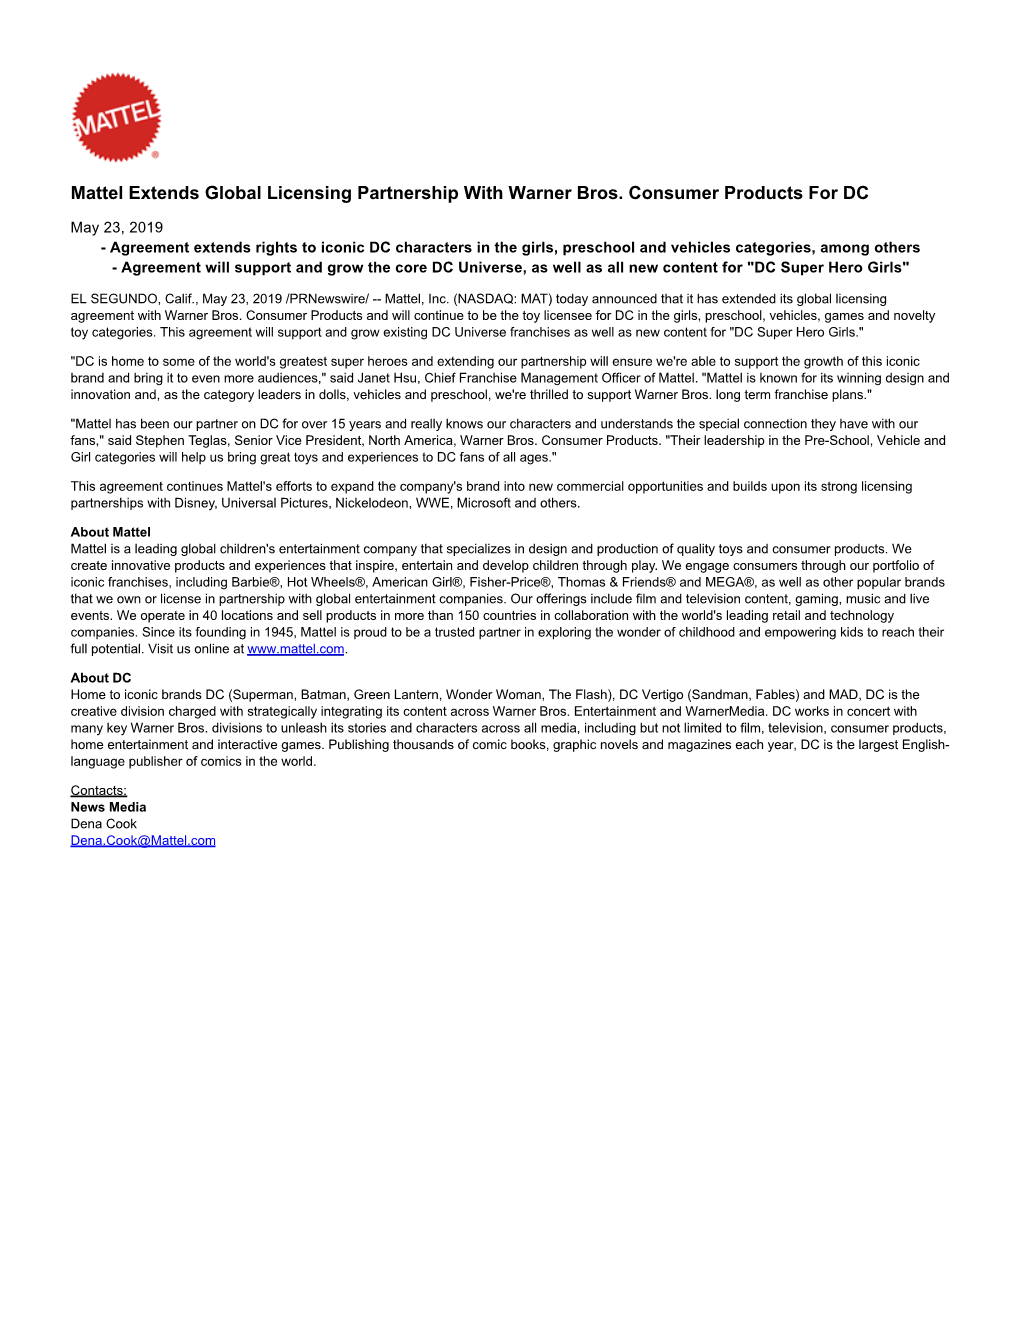 Mattel Extends Global Licensing Partnership with Warner Bros